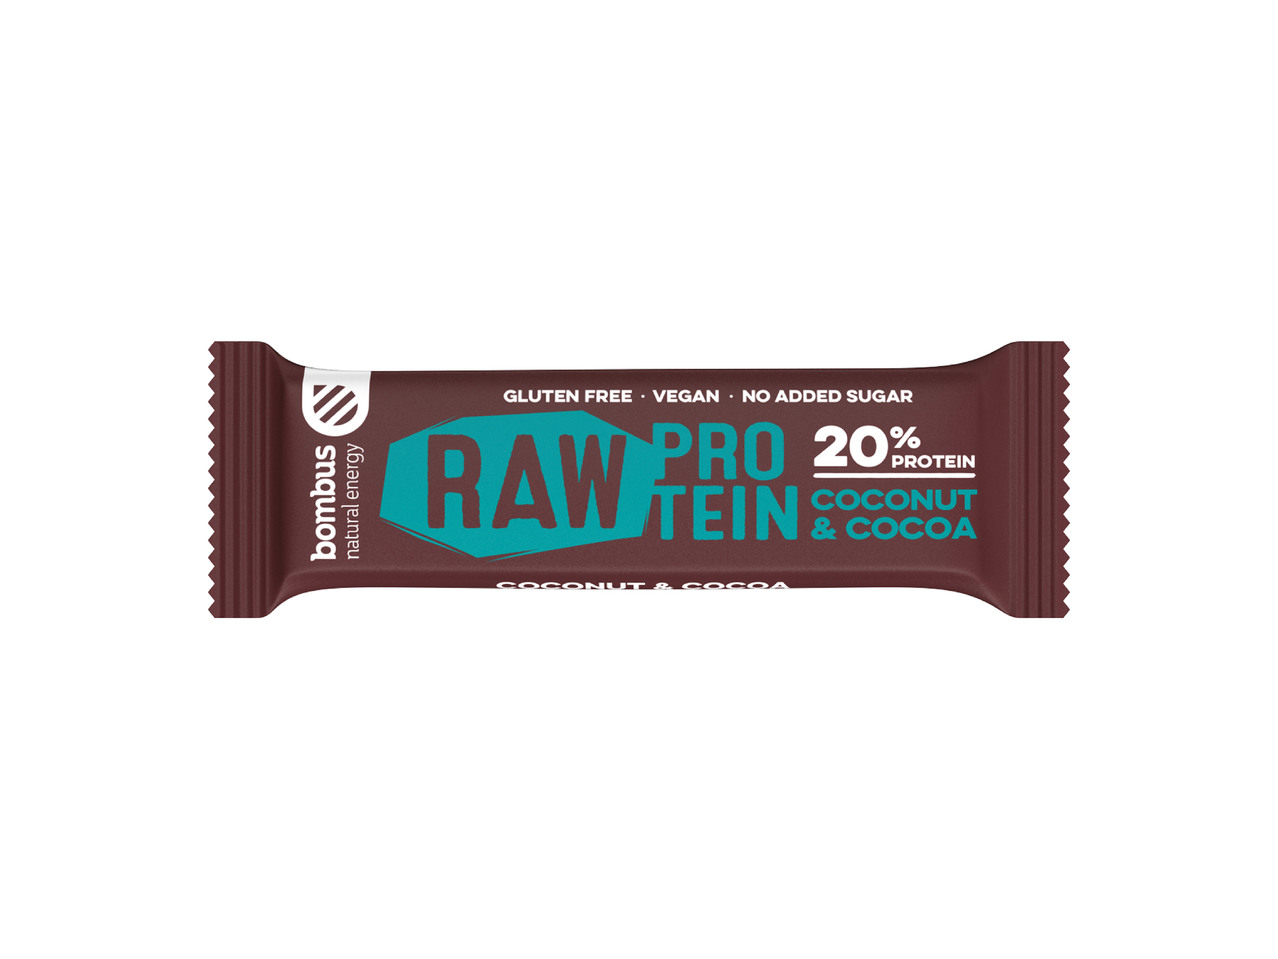 Bombus Raw Bar protein